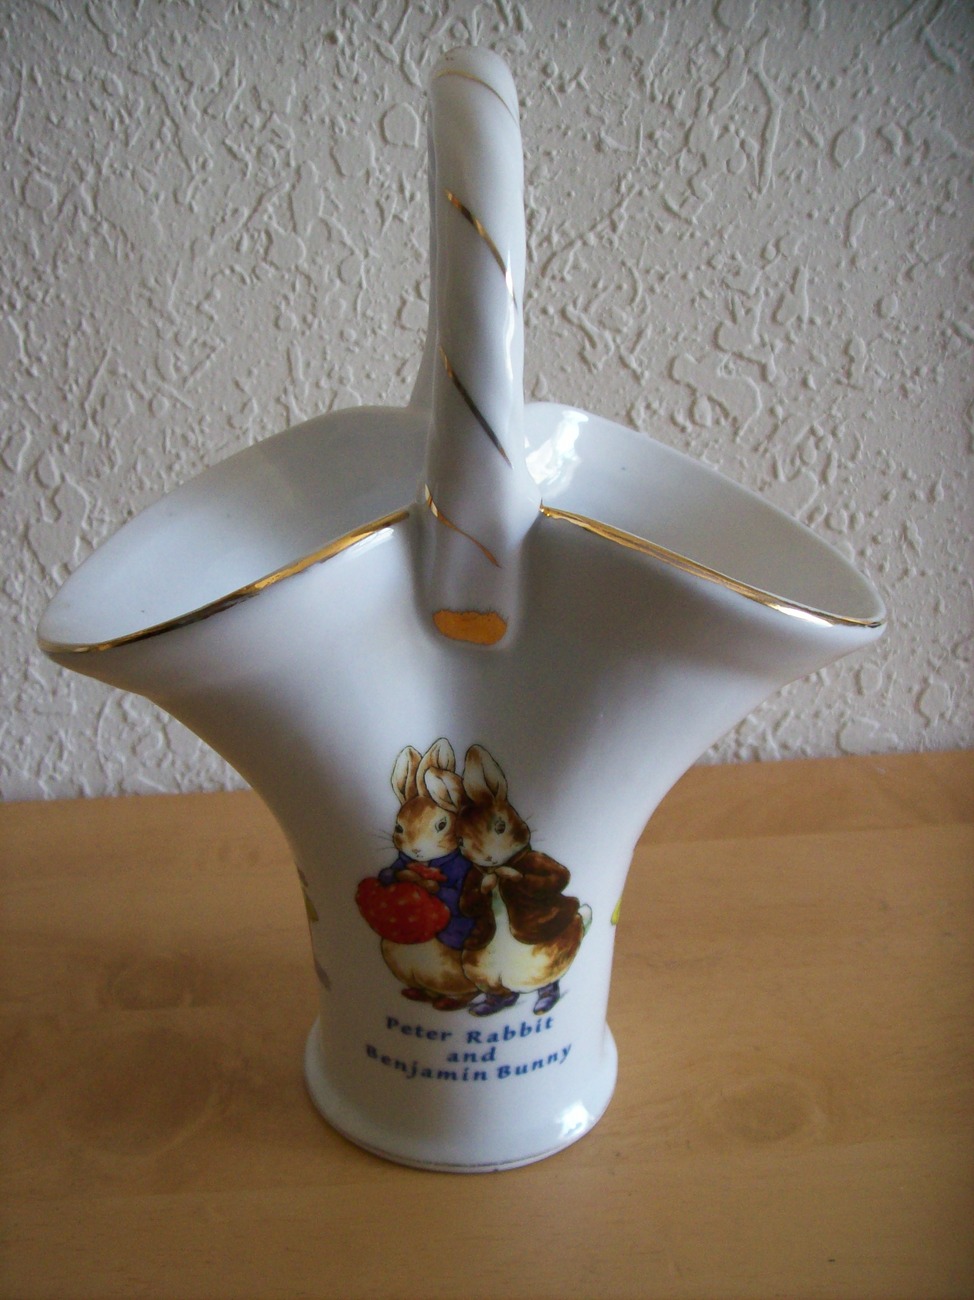 Beatrix Potter “Peter Rabbit and Benjamin Bunny” Porcelain Handled Vase - $40.00